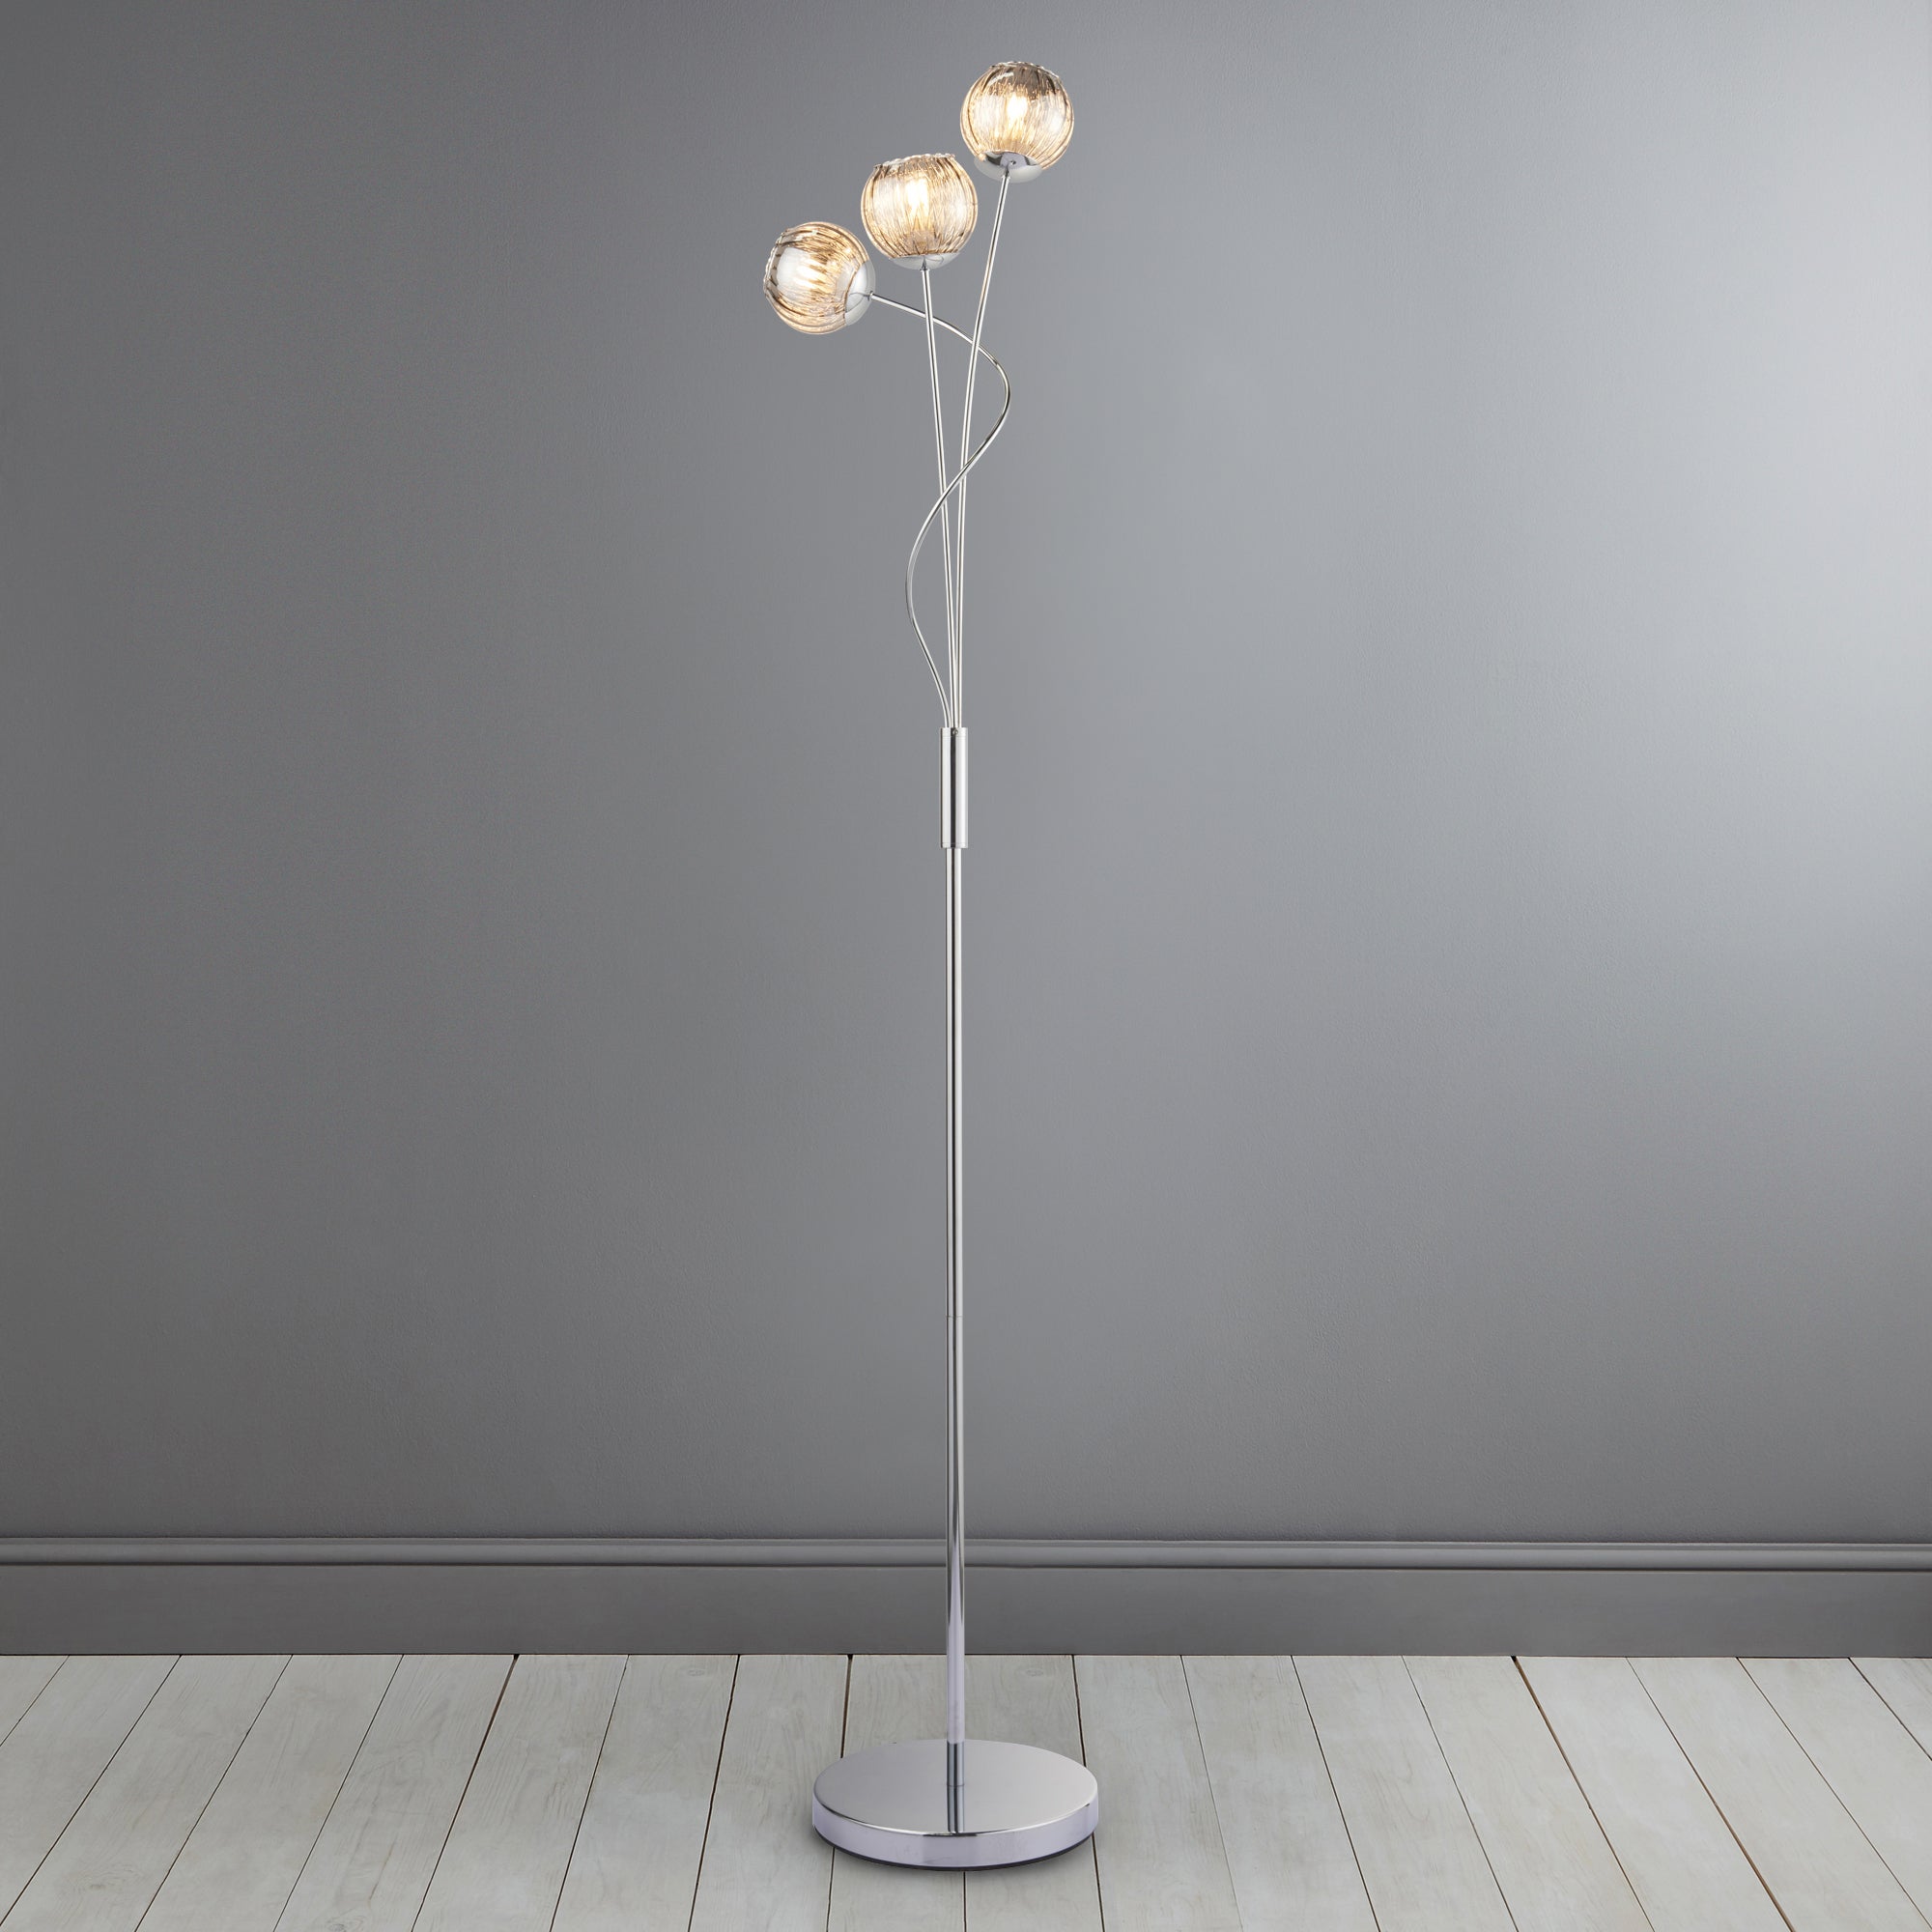 Dunelm Light Shades For Floor Lamps Lamp Design Ideas